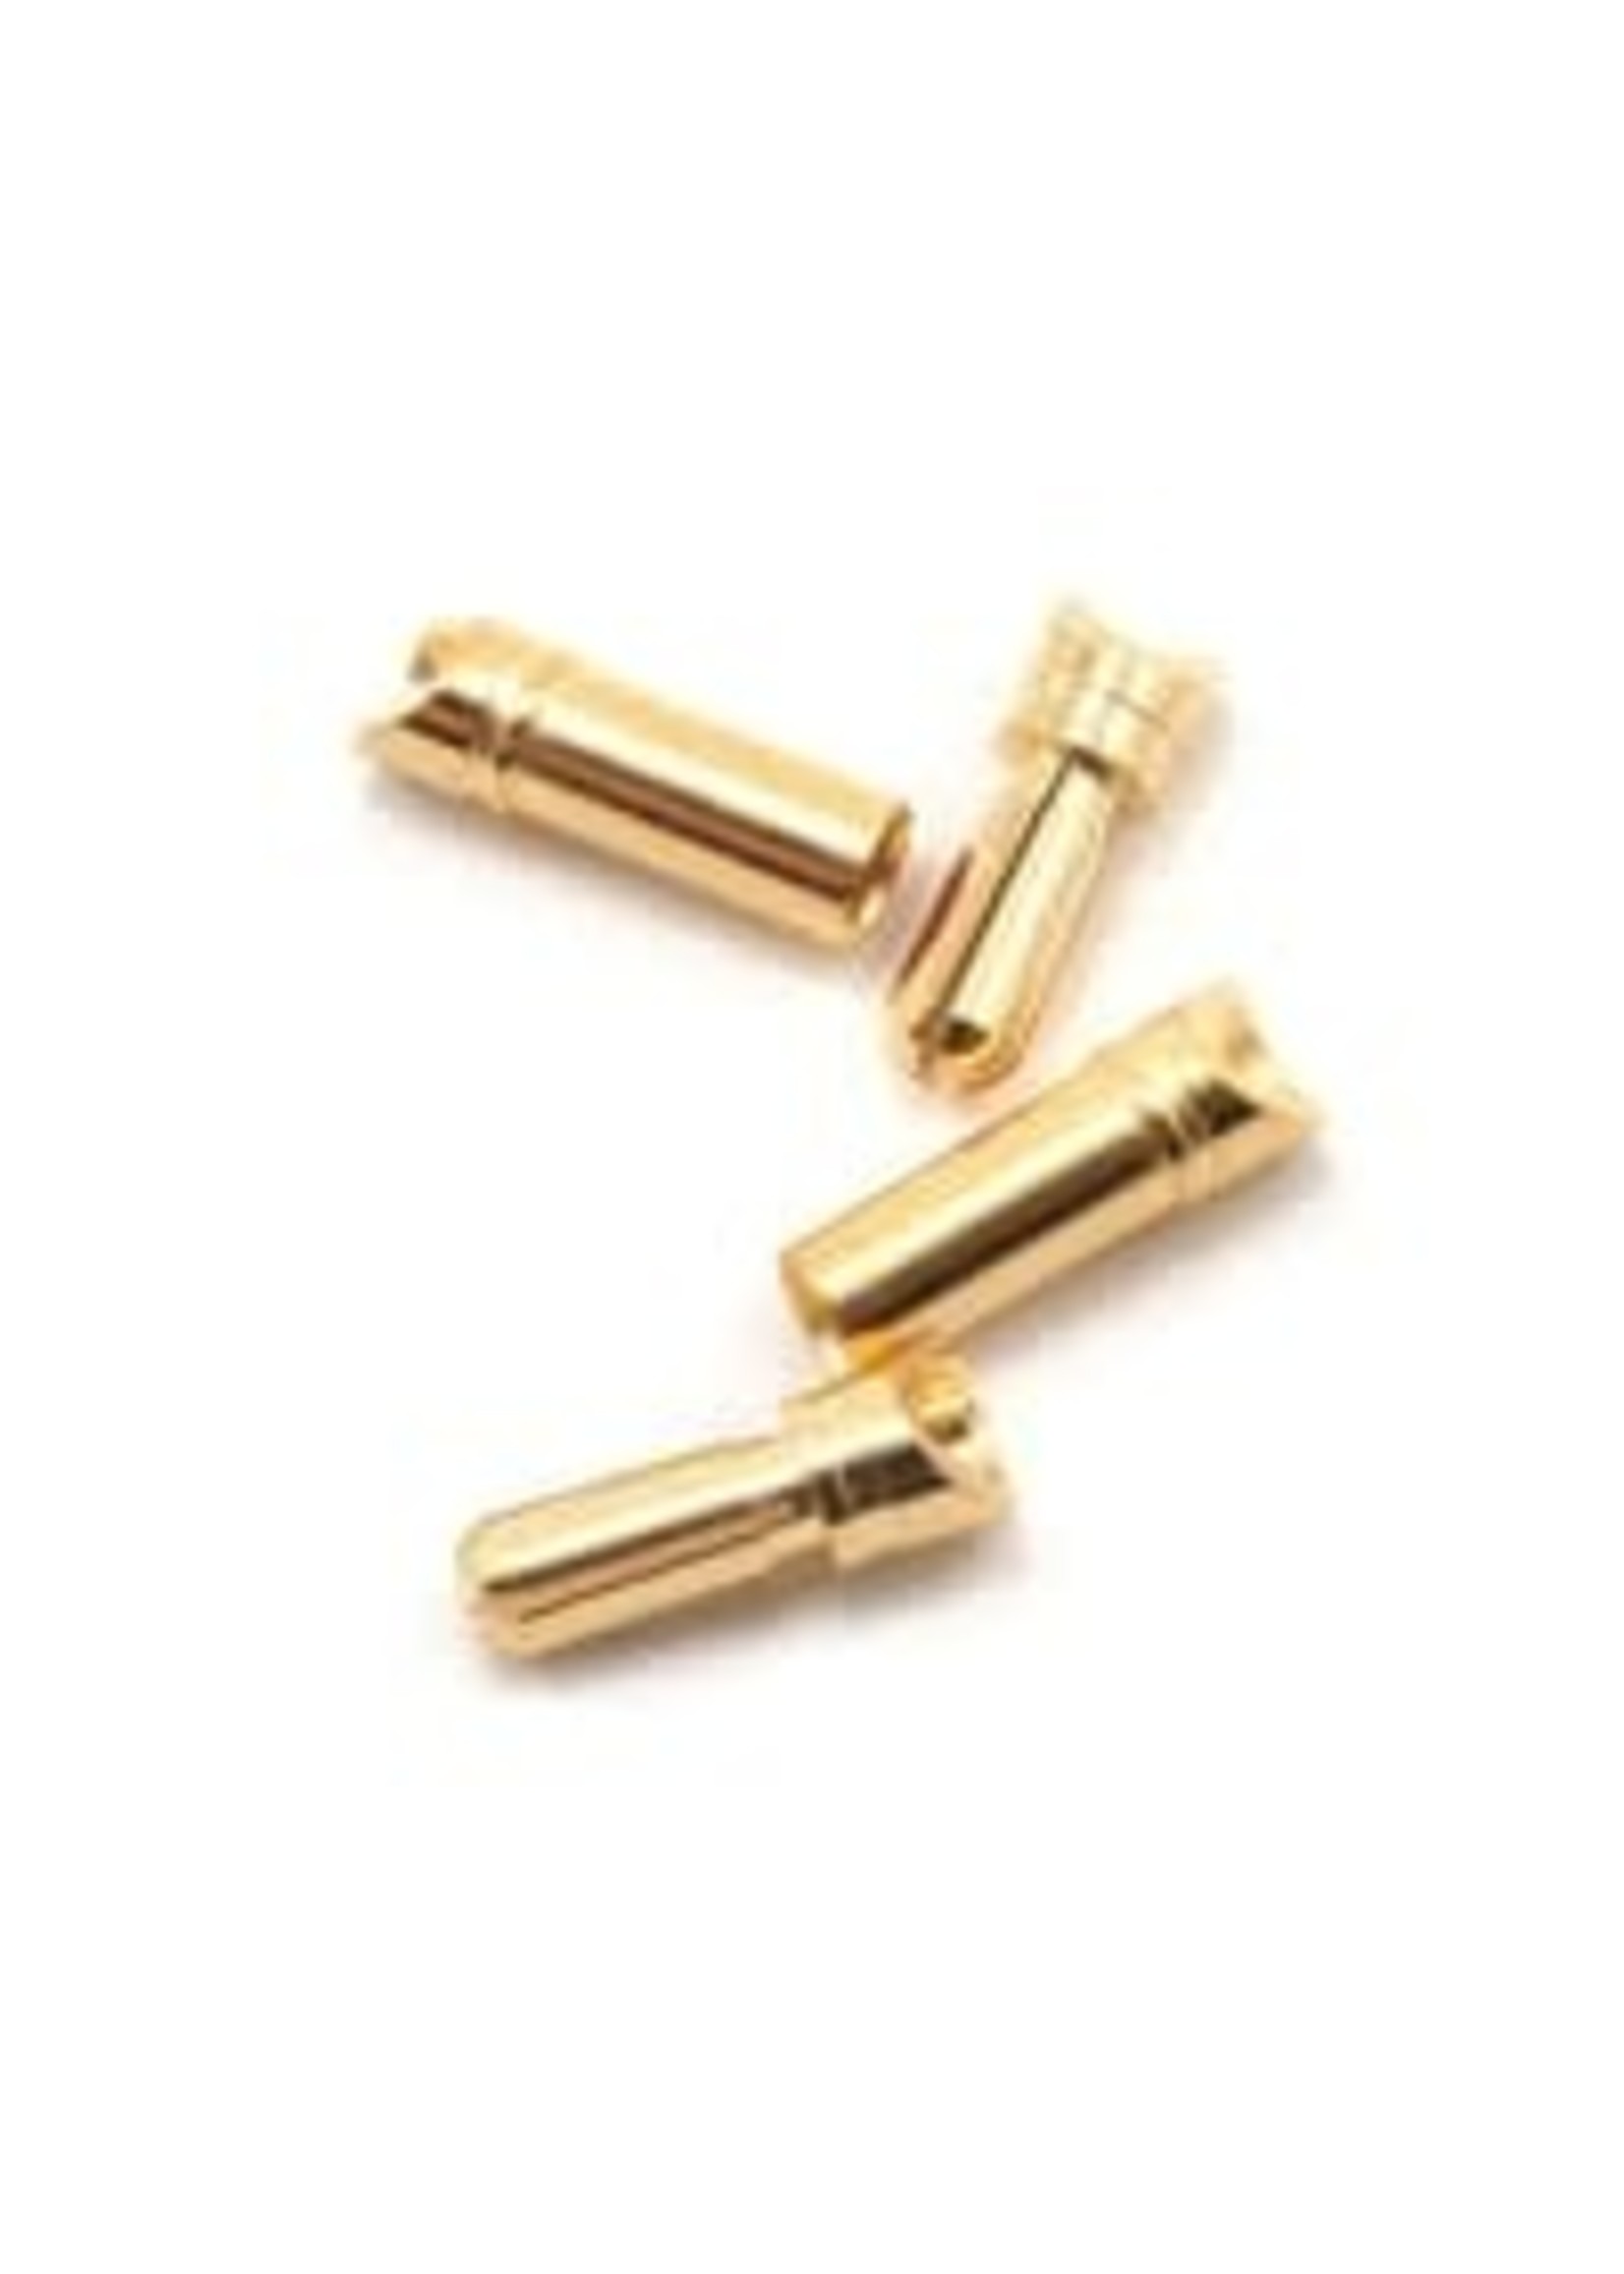 ProTek RC PTK-5031 ProTek RC 3.5mm "Super Bullet" Gold Connectors (2 Male/2 Female)